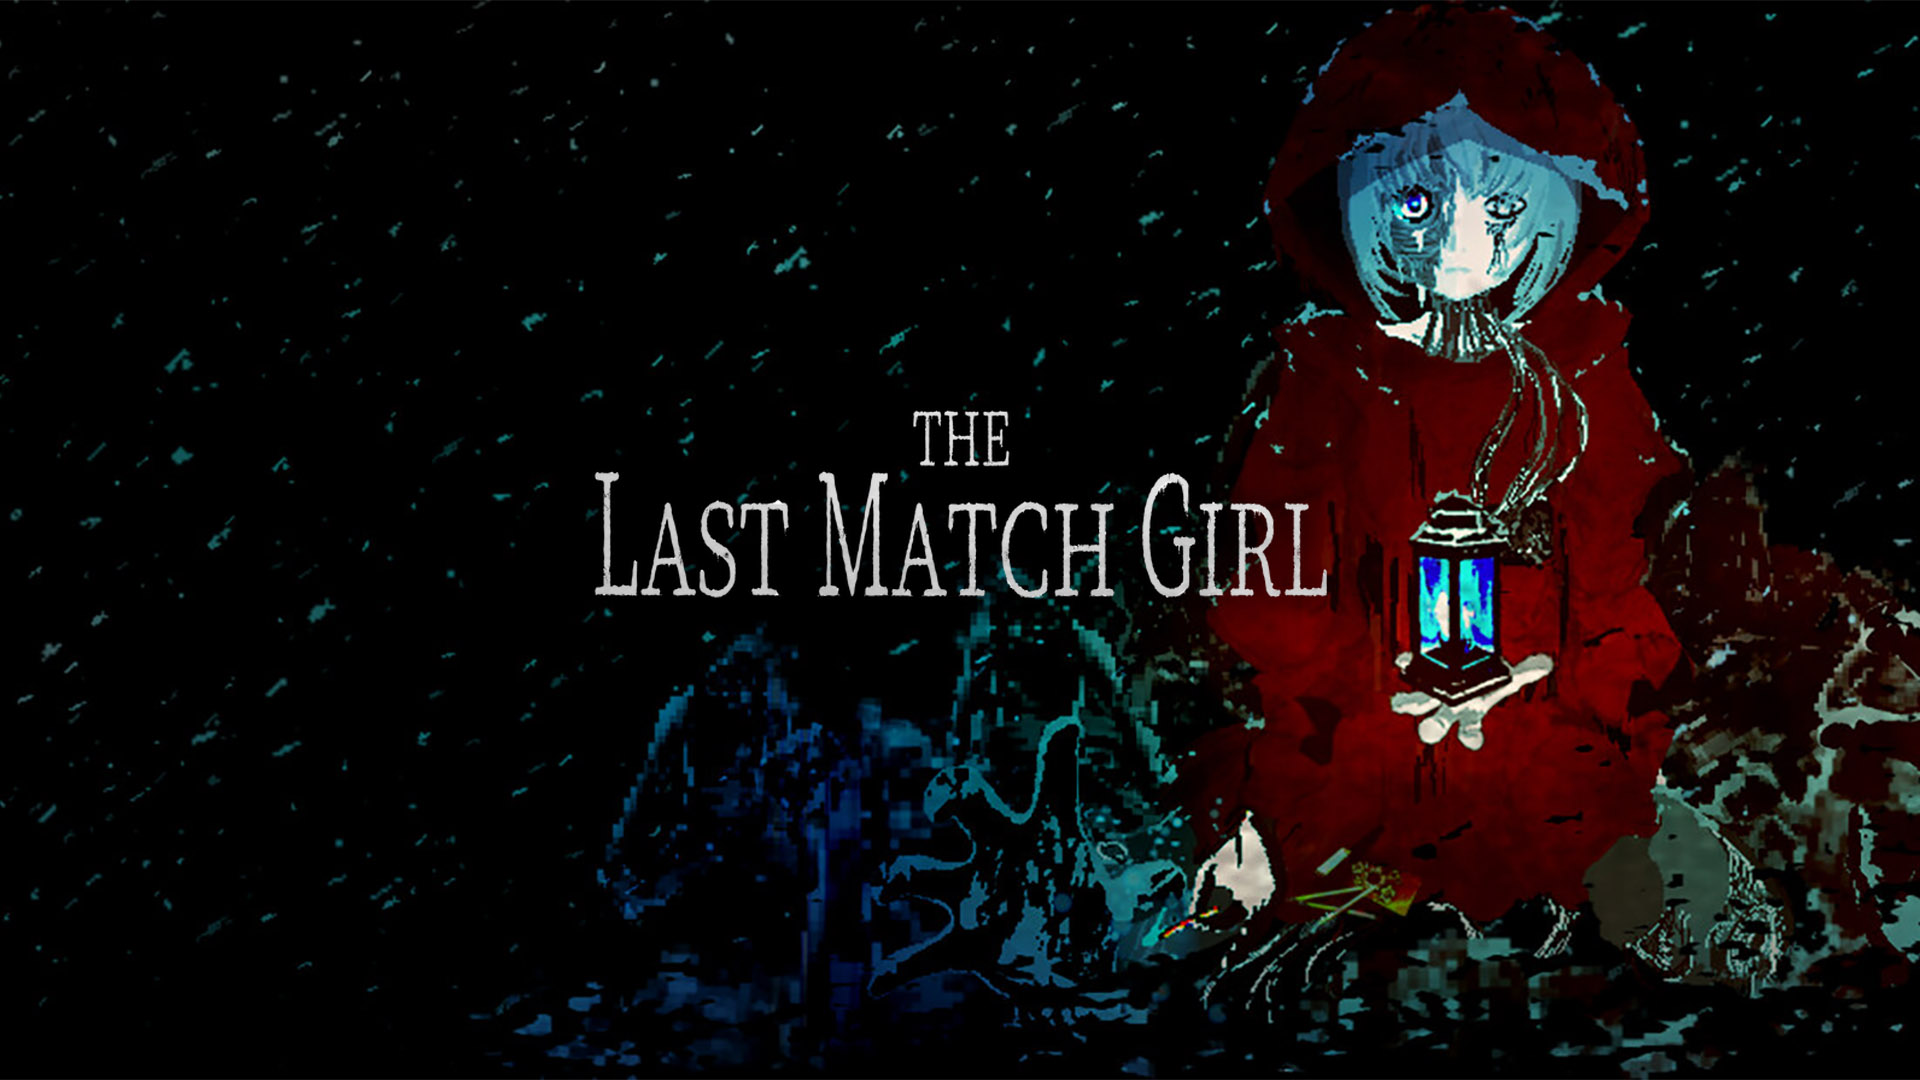 THE LAST MATCH GIRL